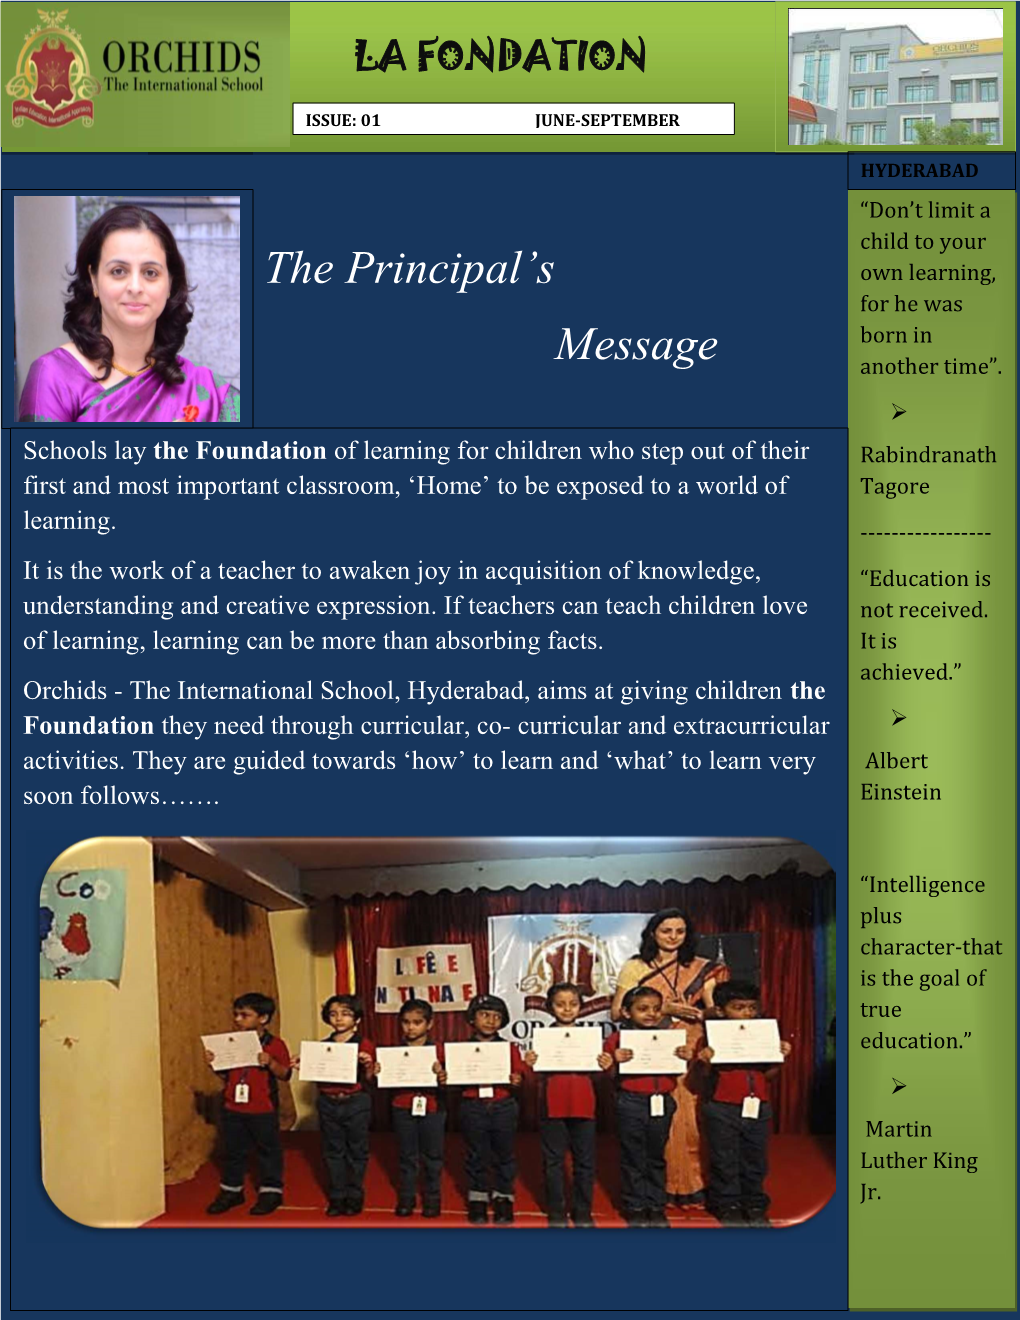 The Principal's Message